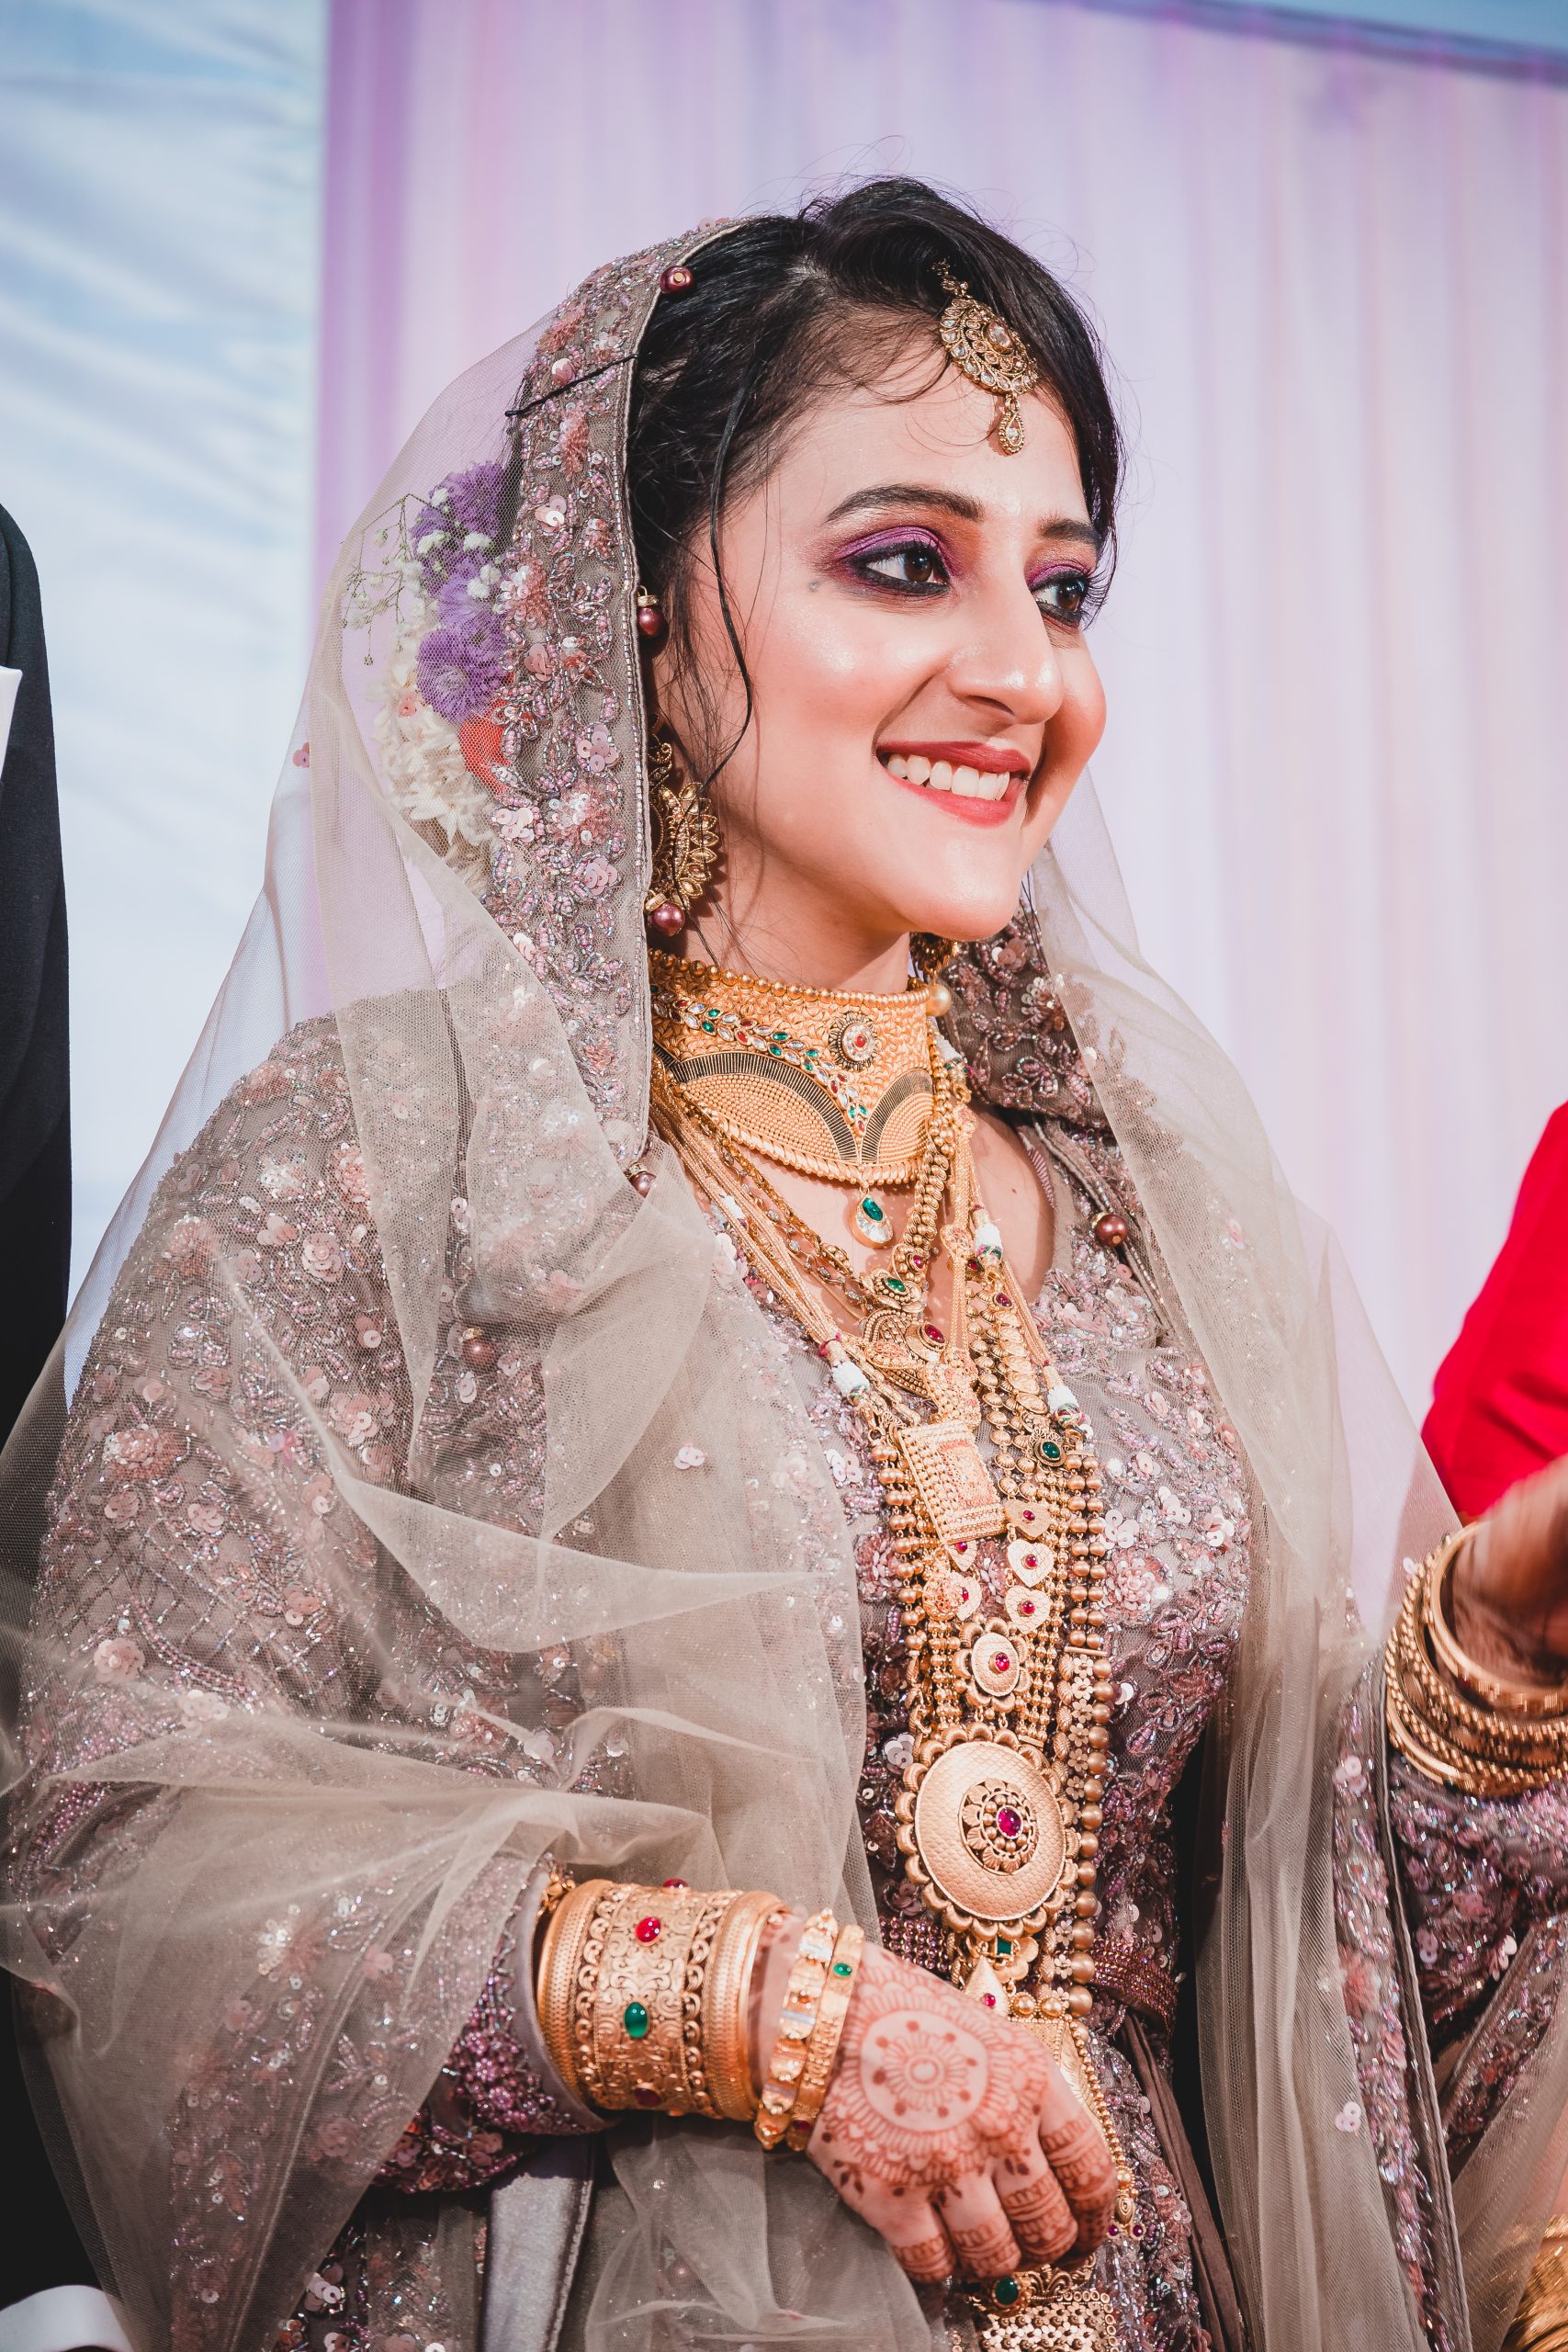 An Indian bride